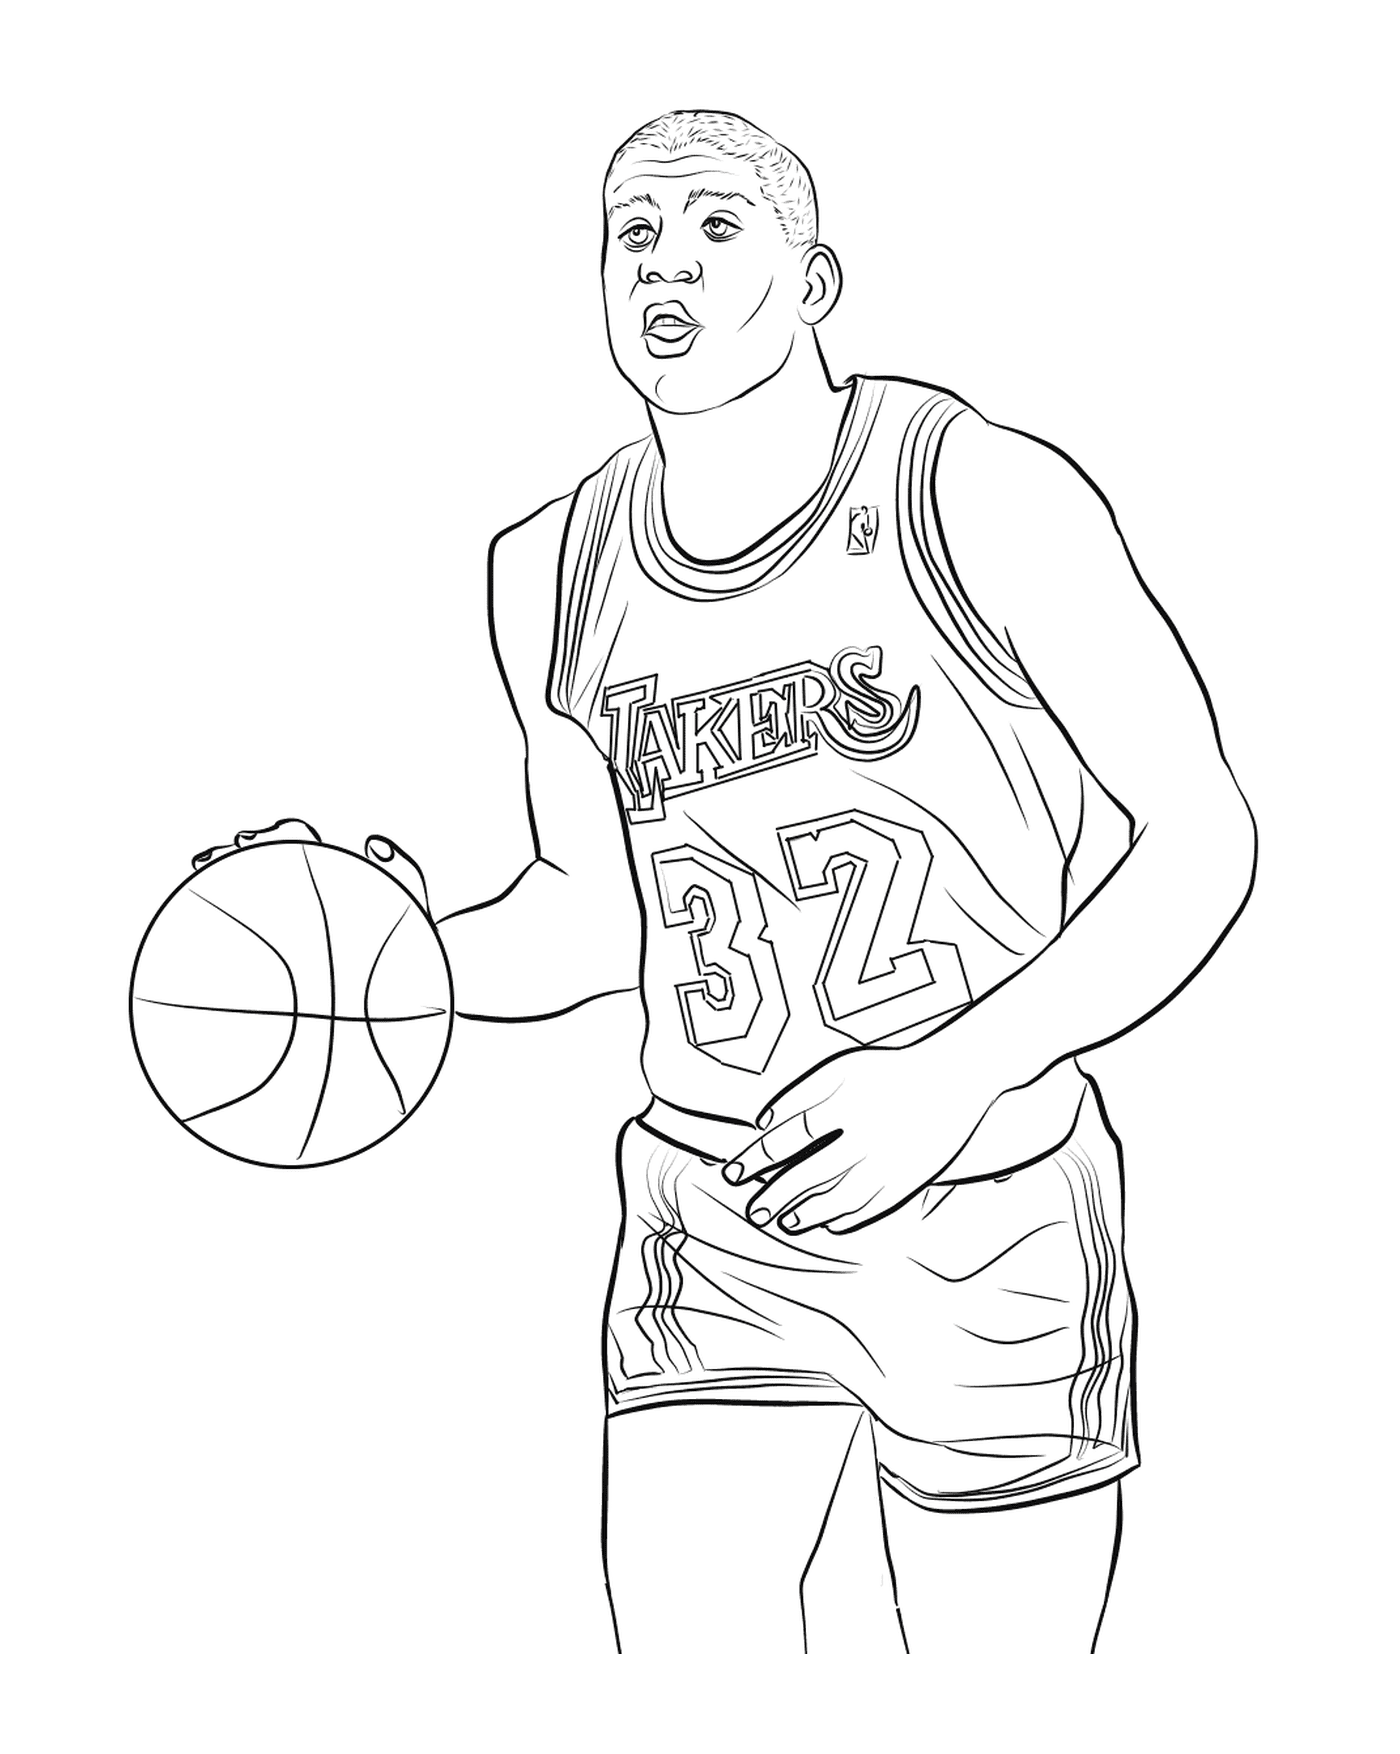  Magic Johnson, jugador de baloncesto 